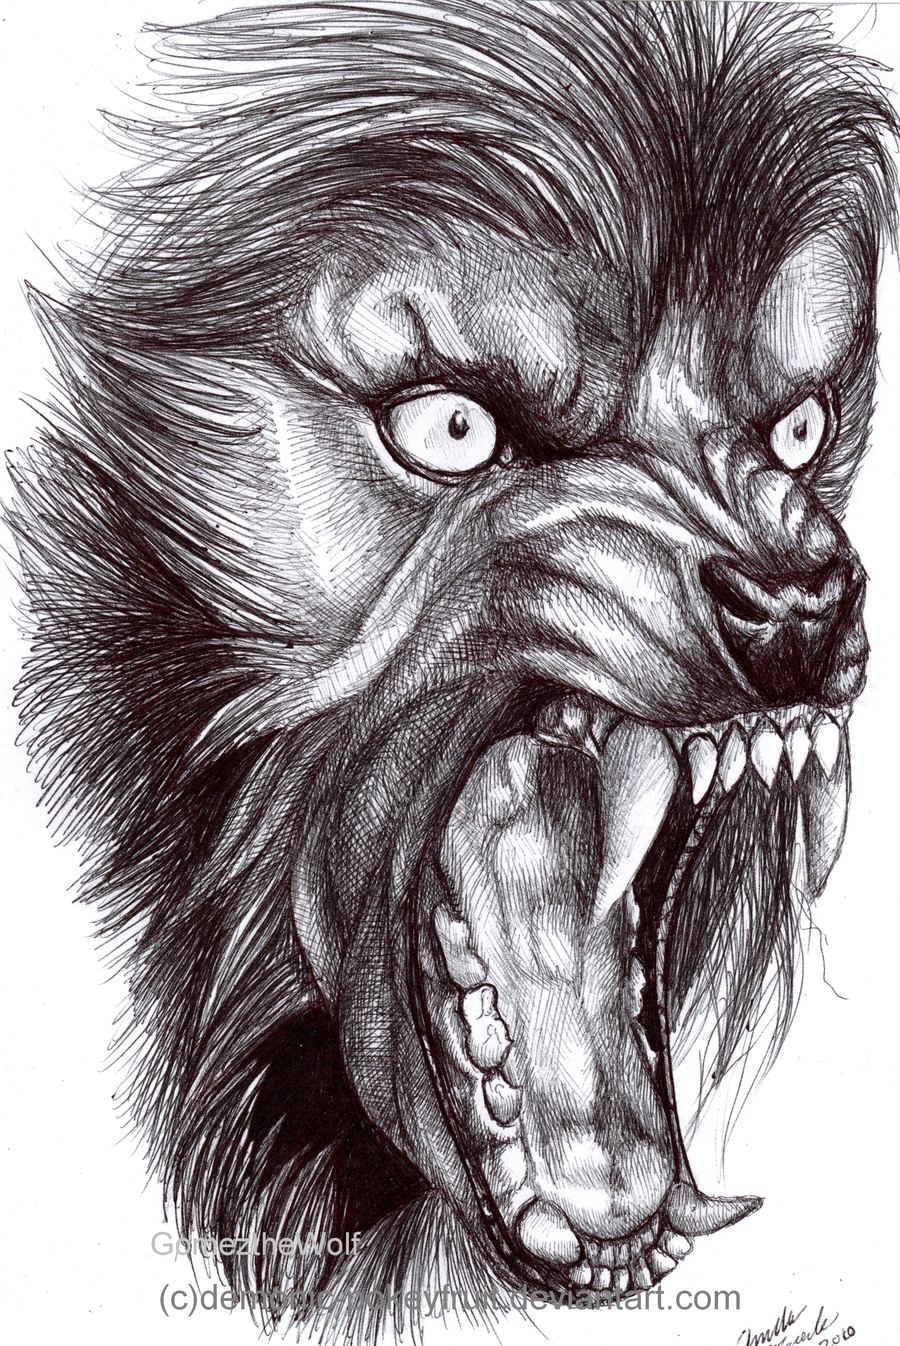 The American Werewolf by Demonic-Pokeyfruit